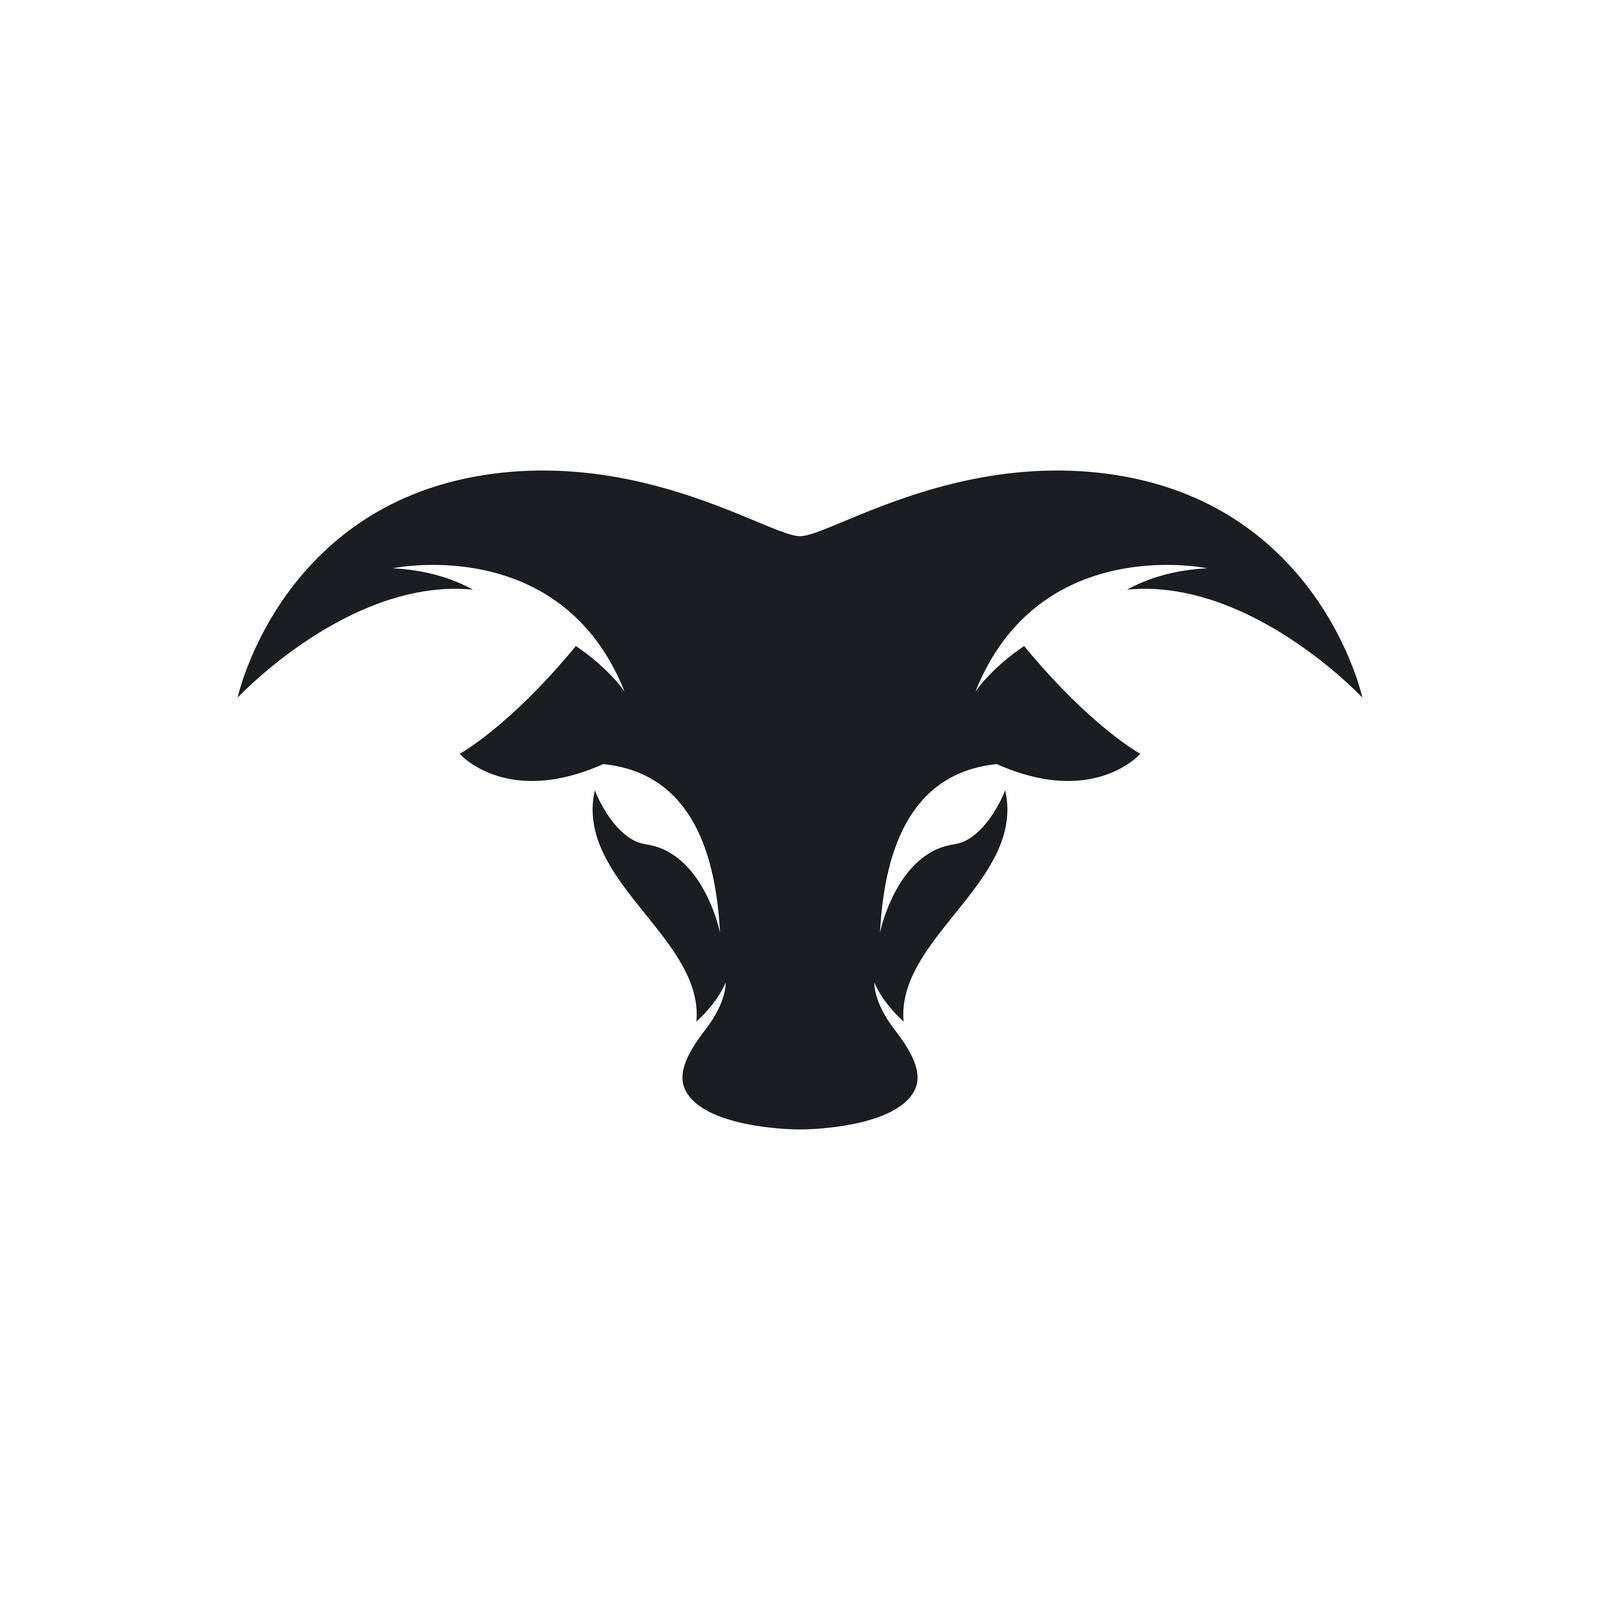 Bull head logo vector icon design